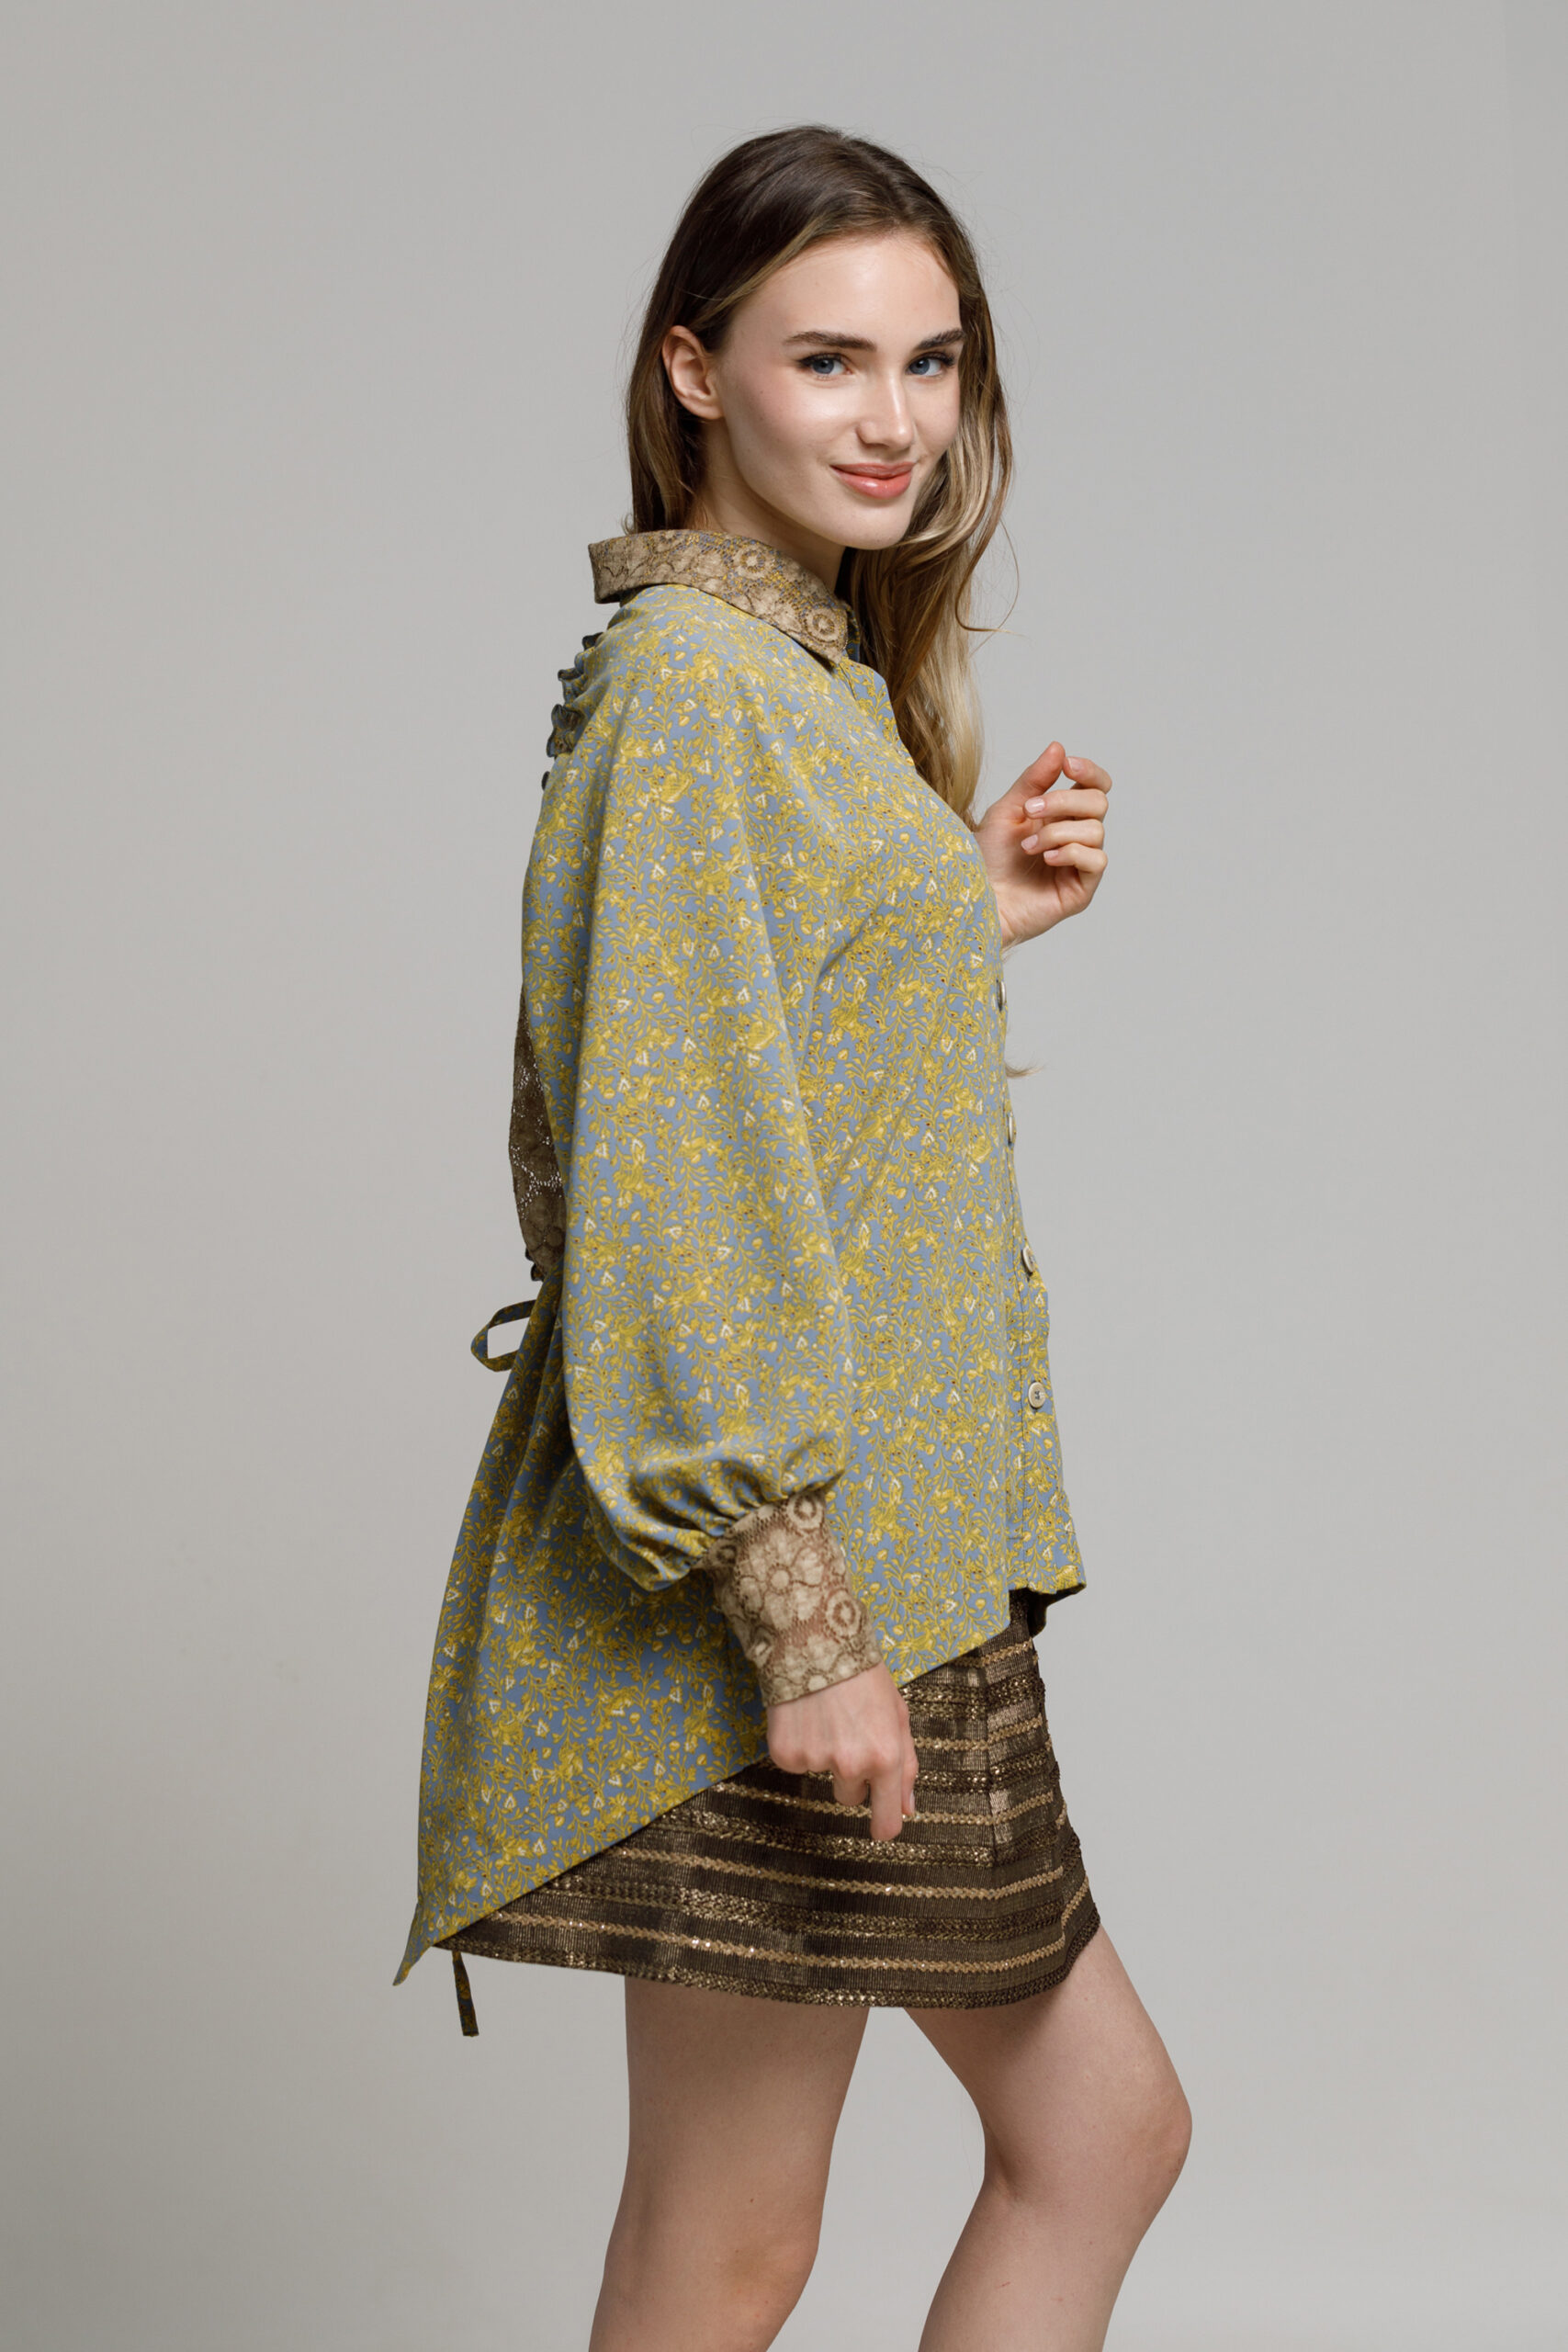 MARINA shirt with floral print. Natural fabrics, original design, handmade embroidery